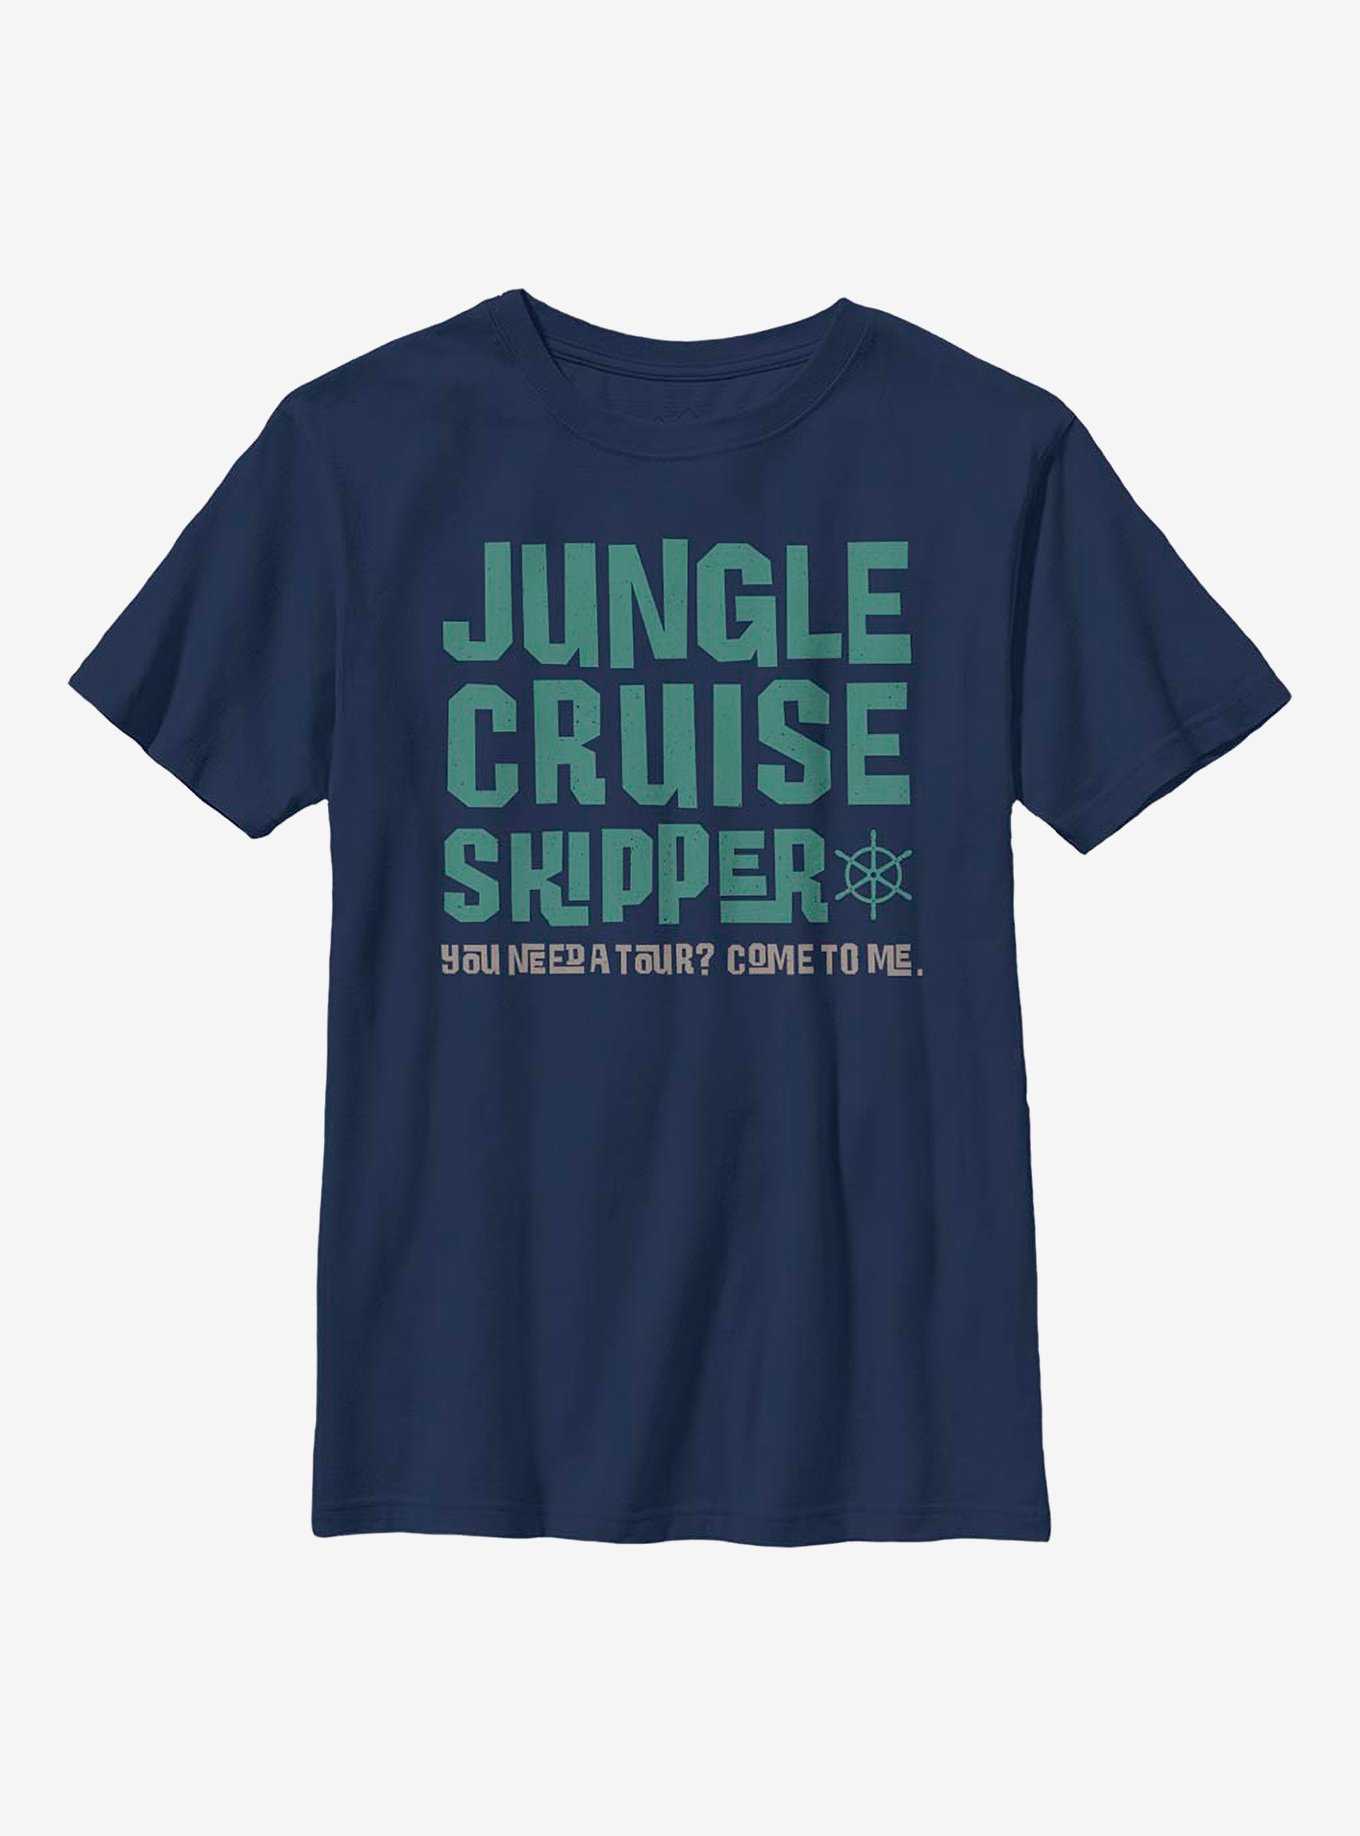 Disney Jungle Cruise Skipper Youth T-Shirt, , hi-res